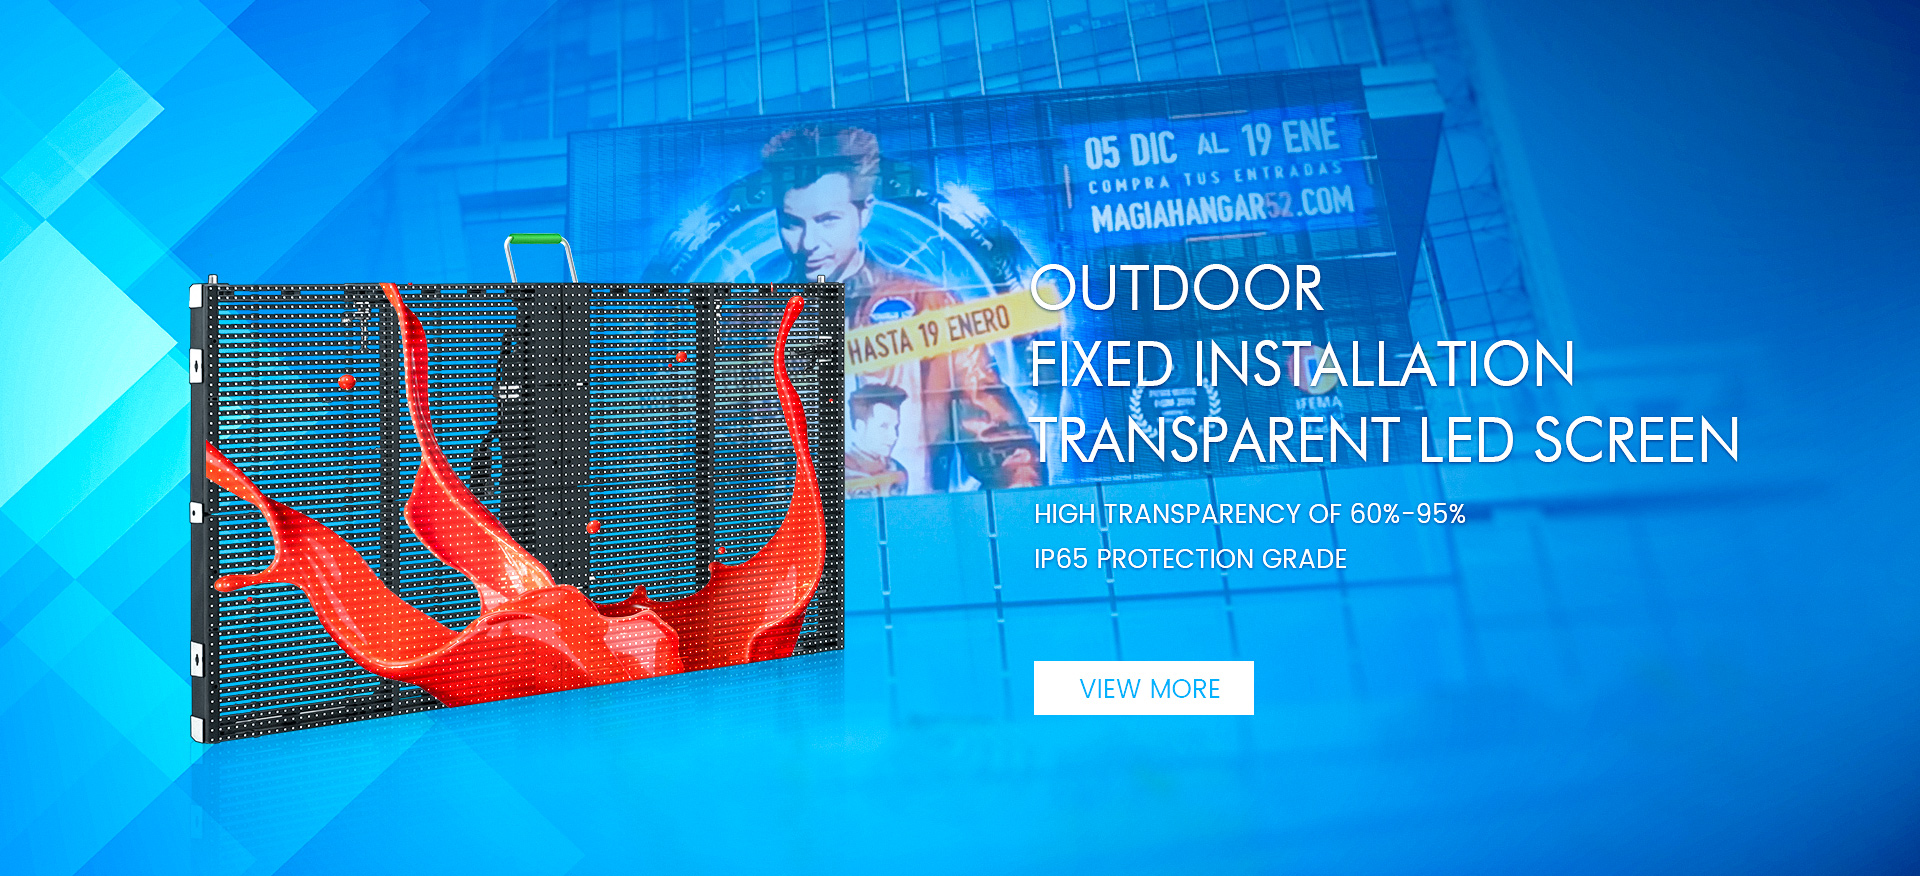 C-Vent Outdoor Transparent LED Screen